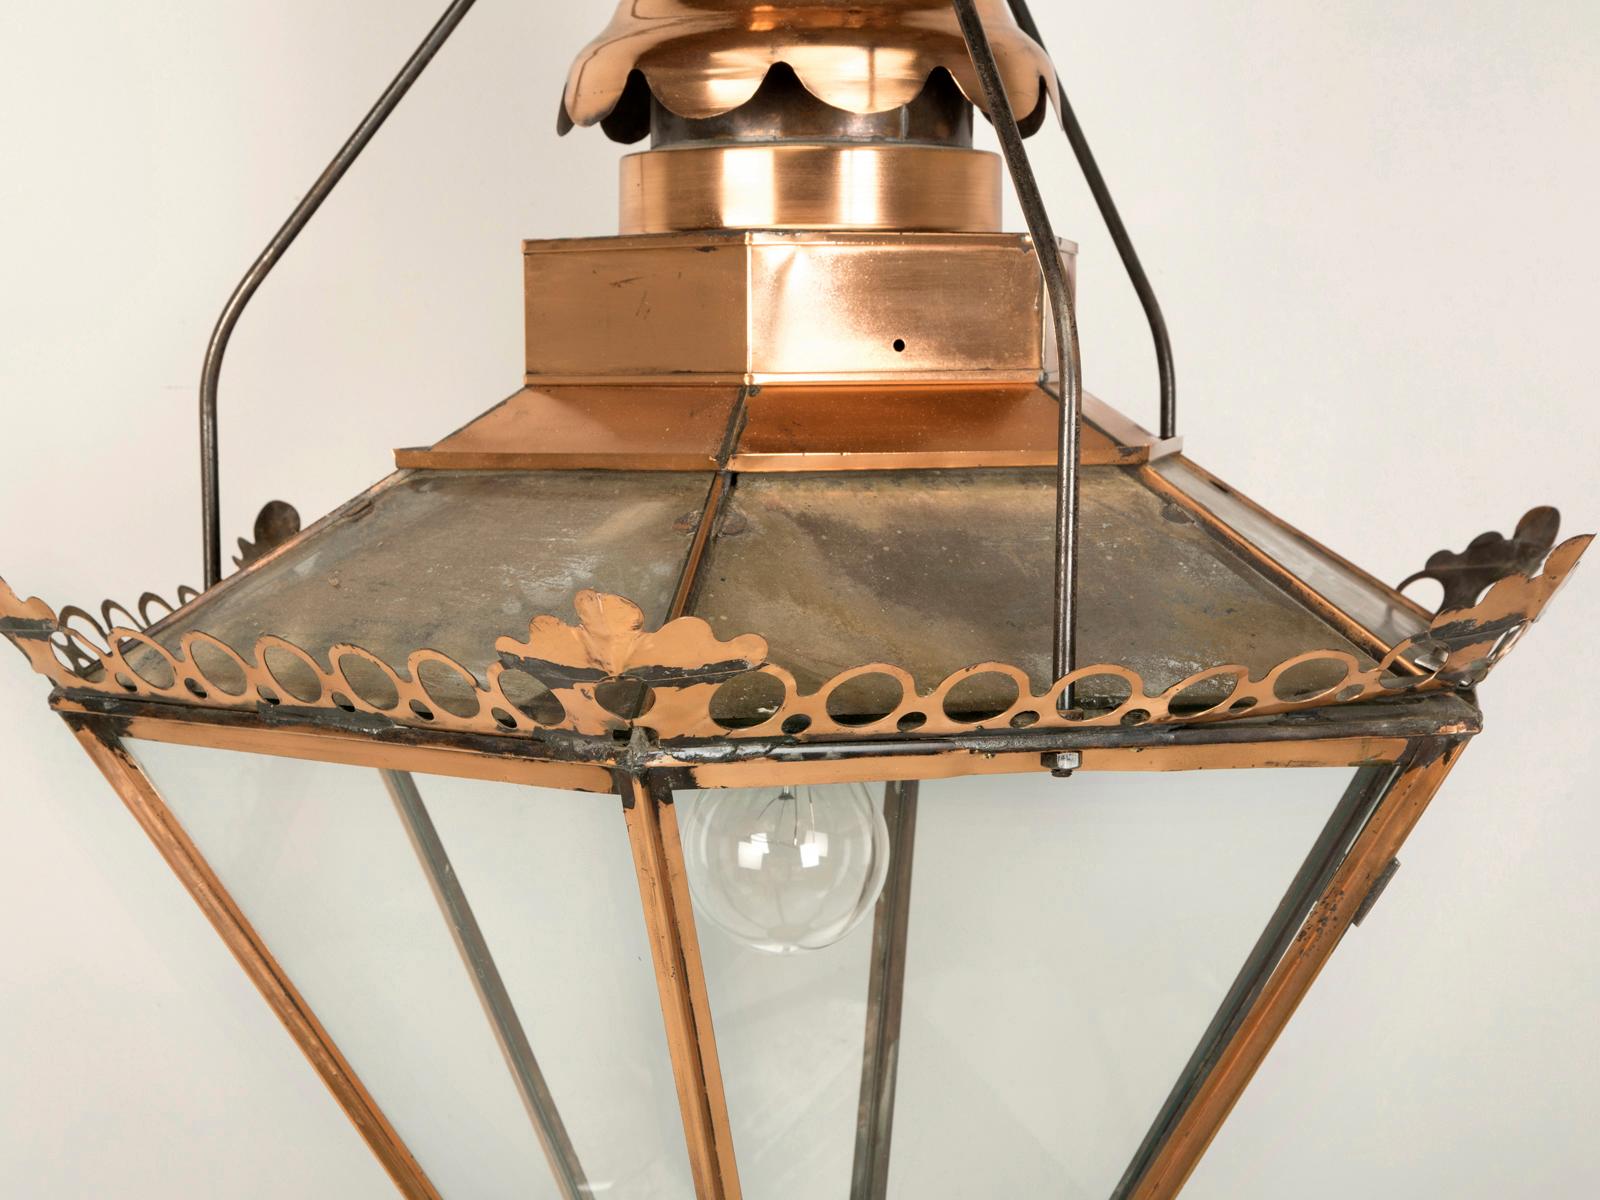 1800s lantern